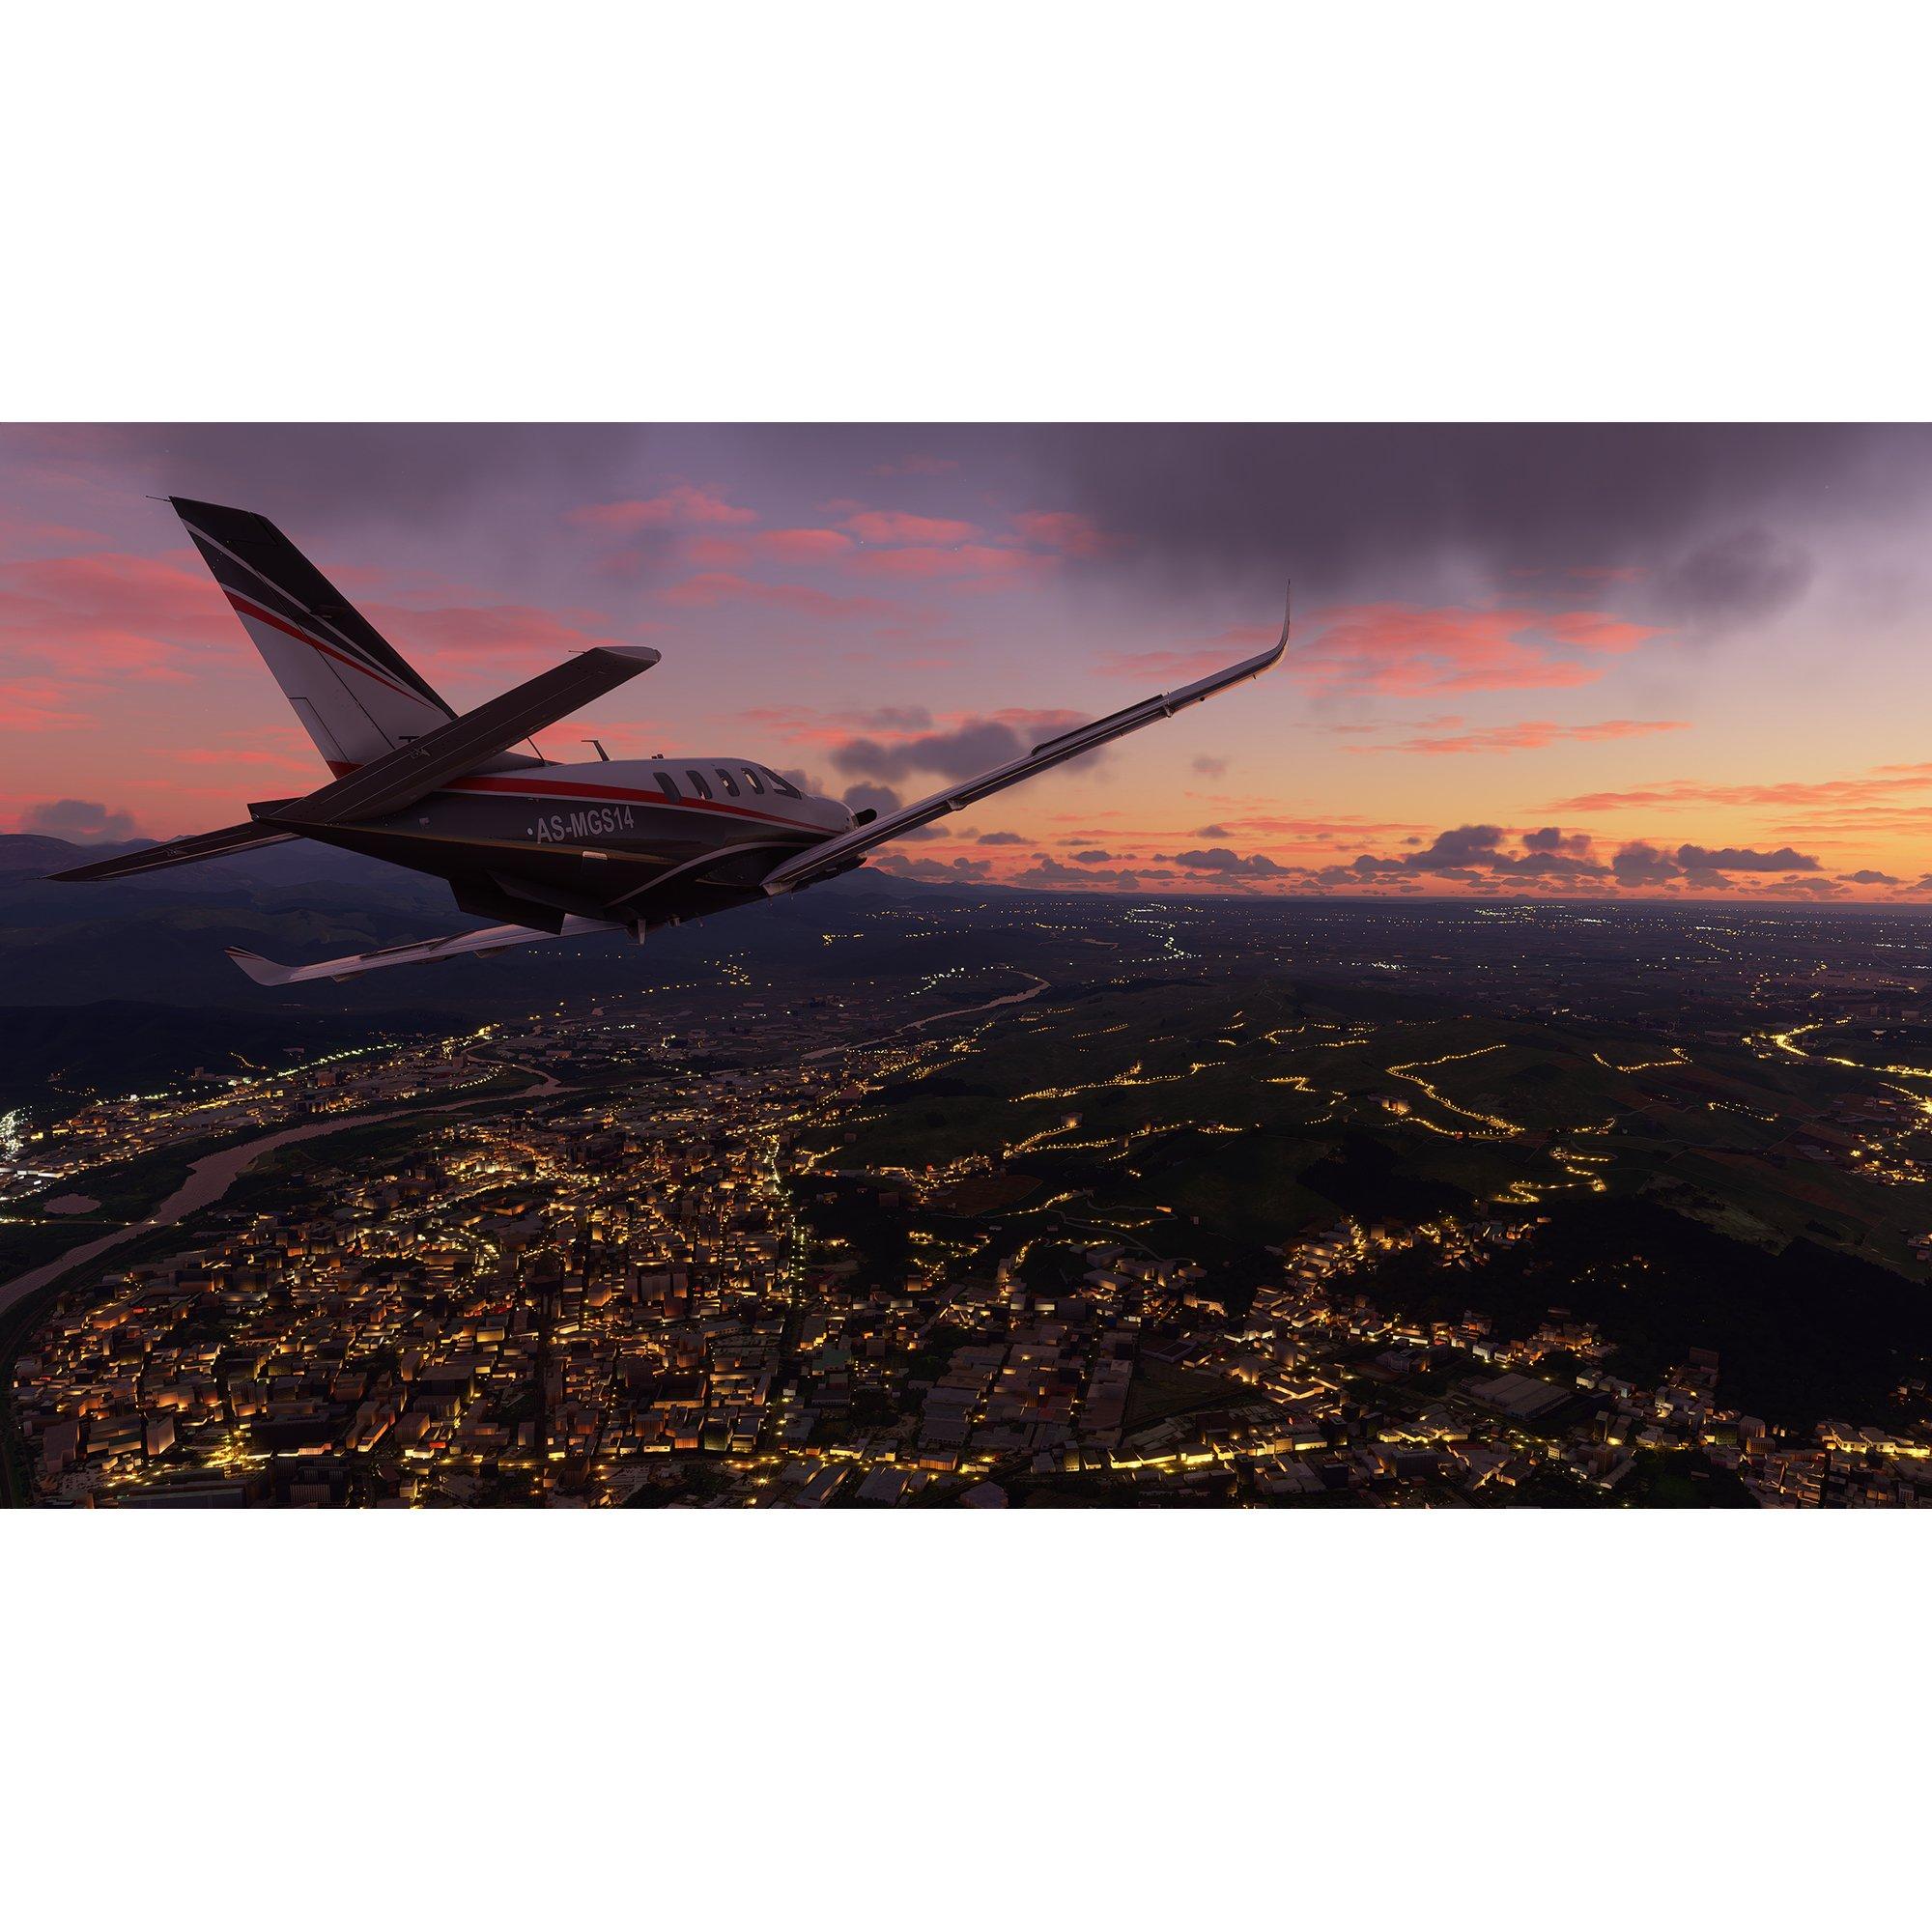 Microsoft Flight Simulator Deluxe Edition - Windows Pc [Digital]